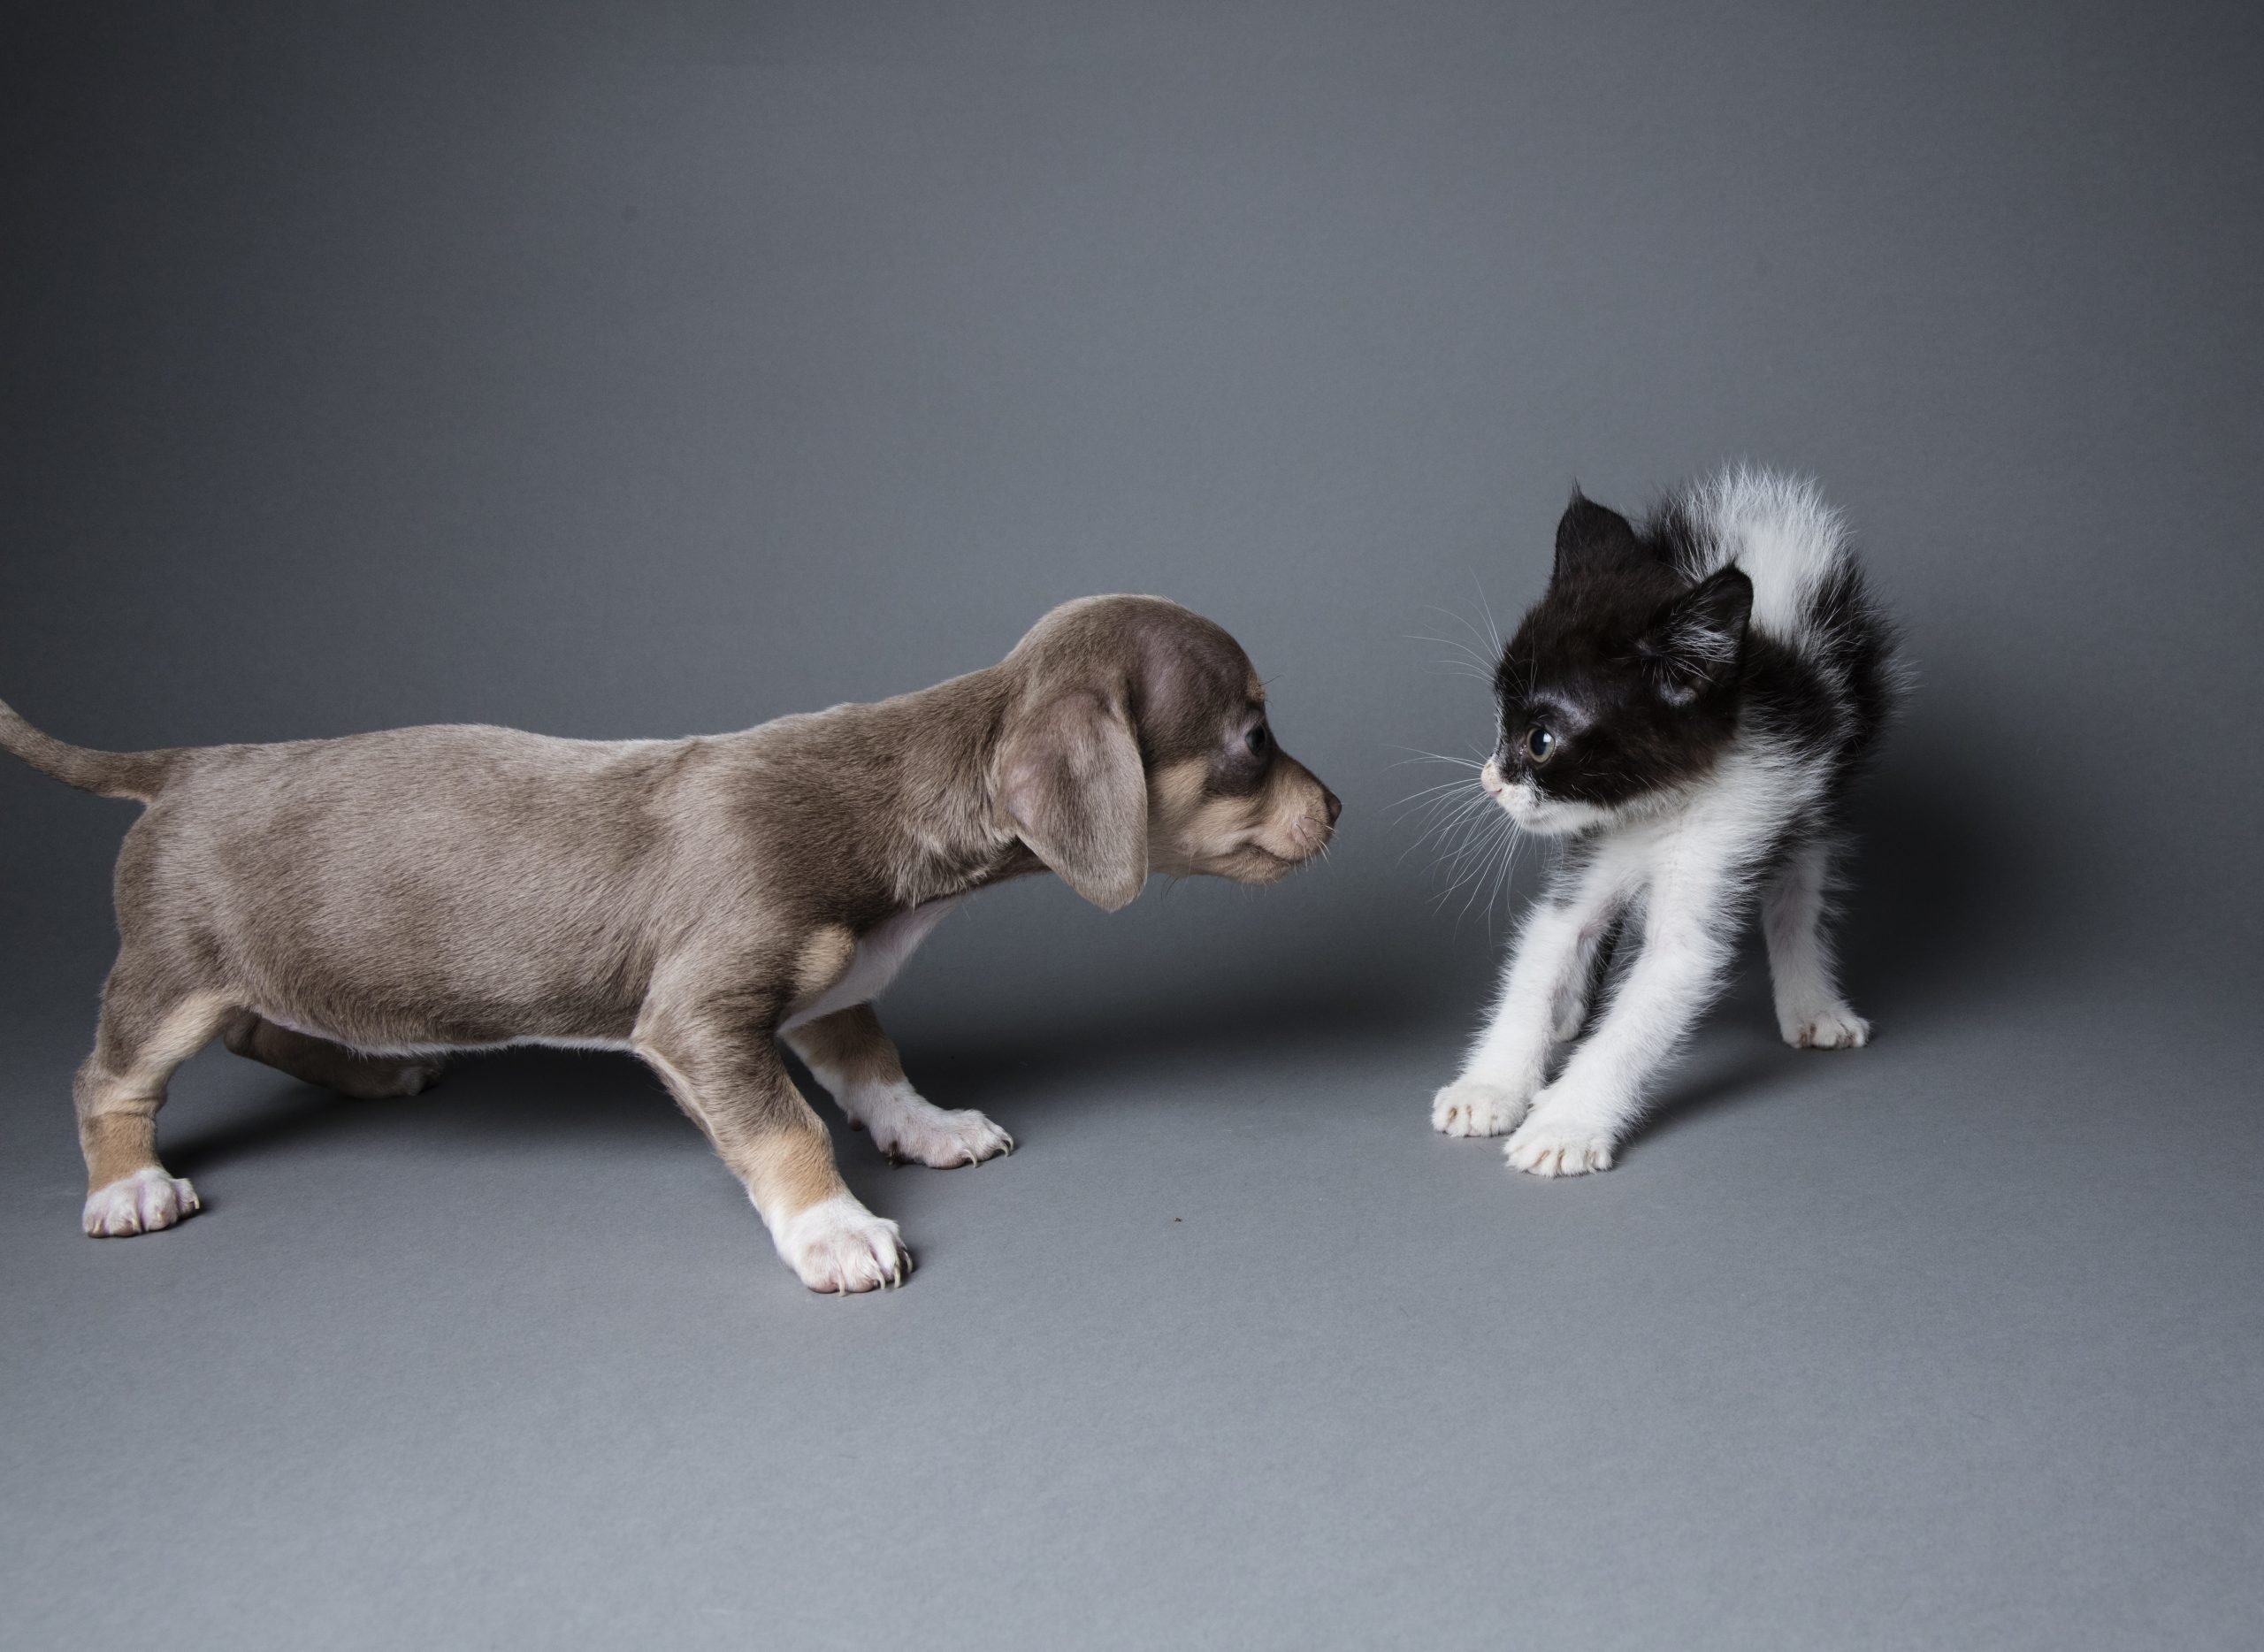 Adorable Puppy Scaring a Kitten - The Amanda Collection